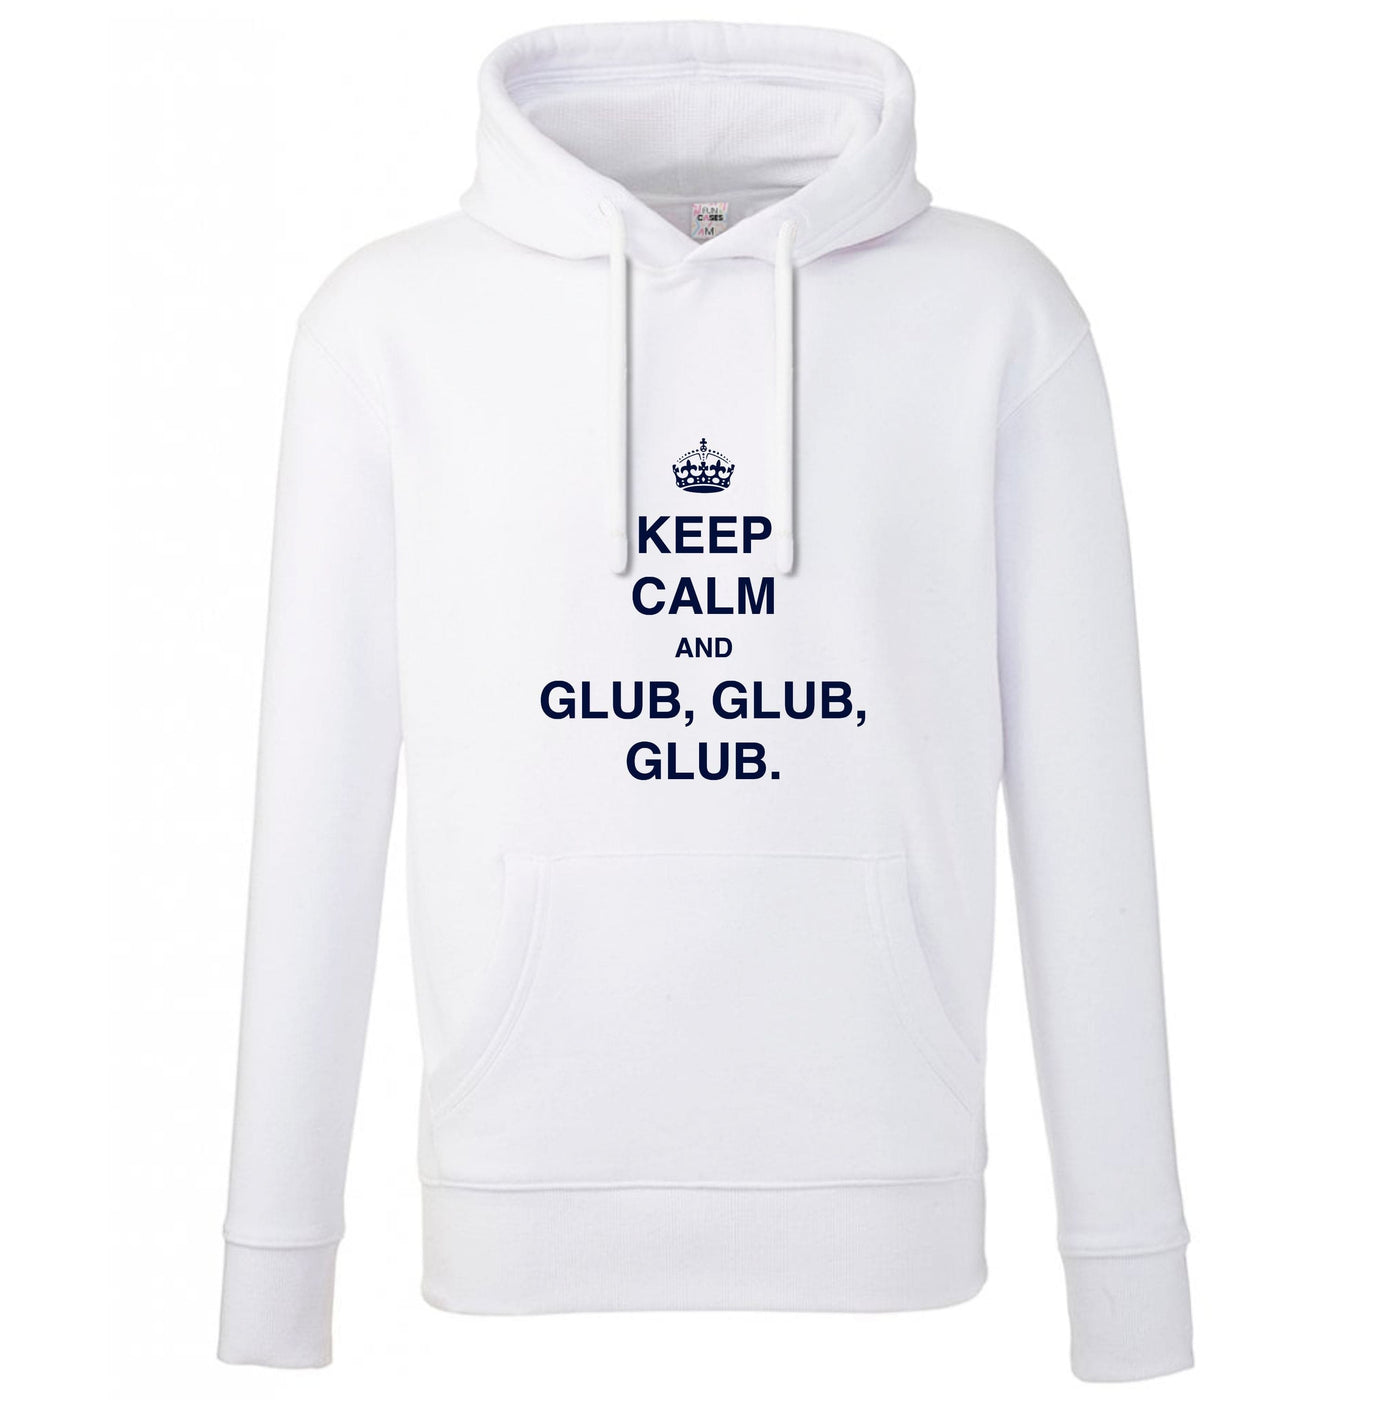 Keep Calm And Glub Glub - Brooklyn Nine-Nine Hoodie